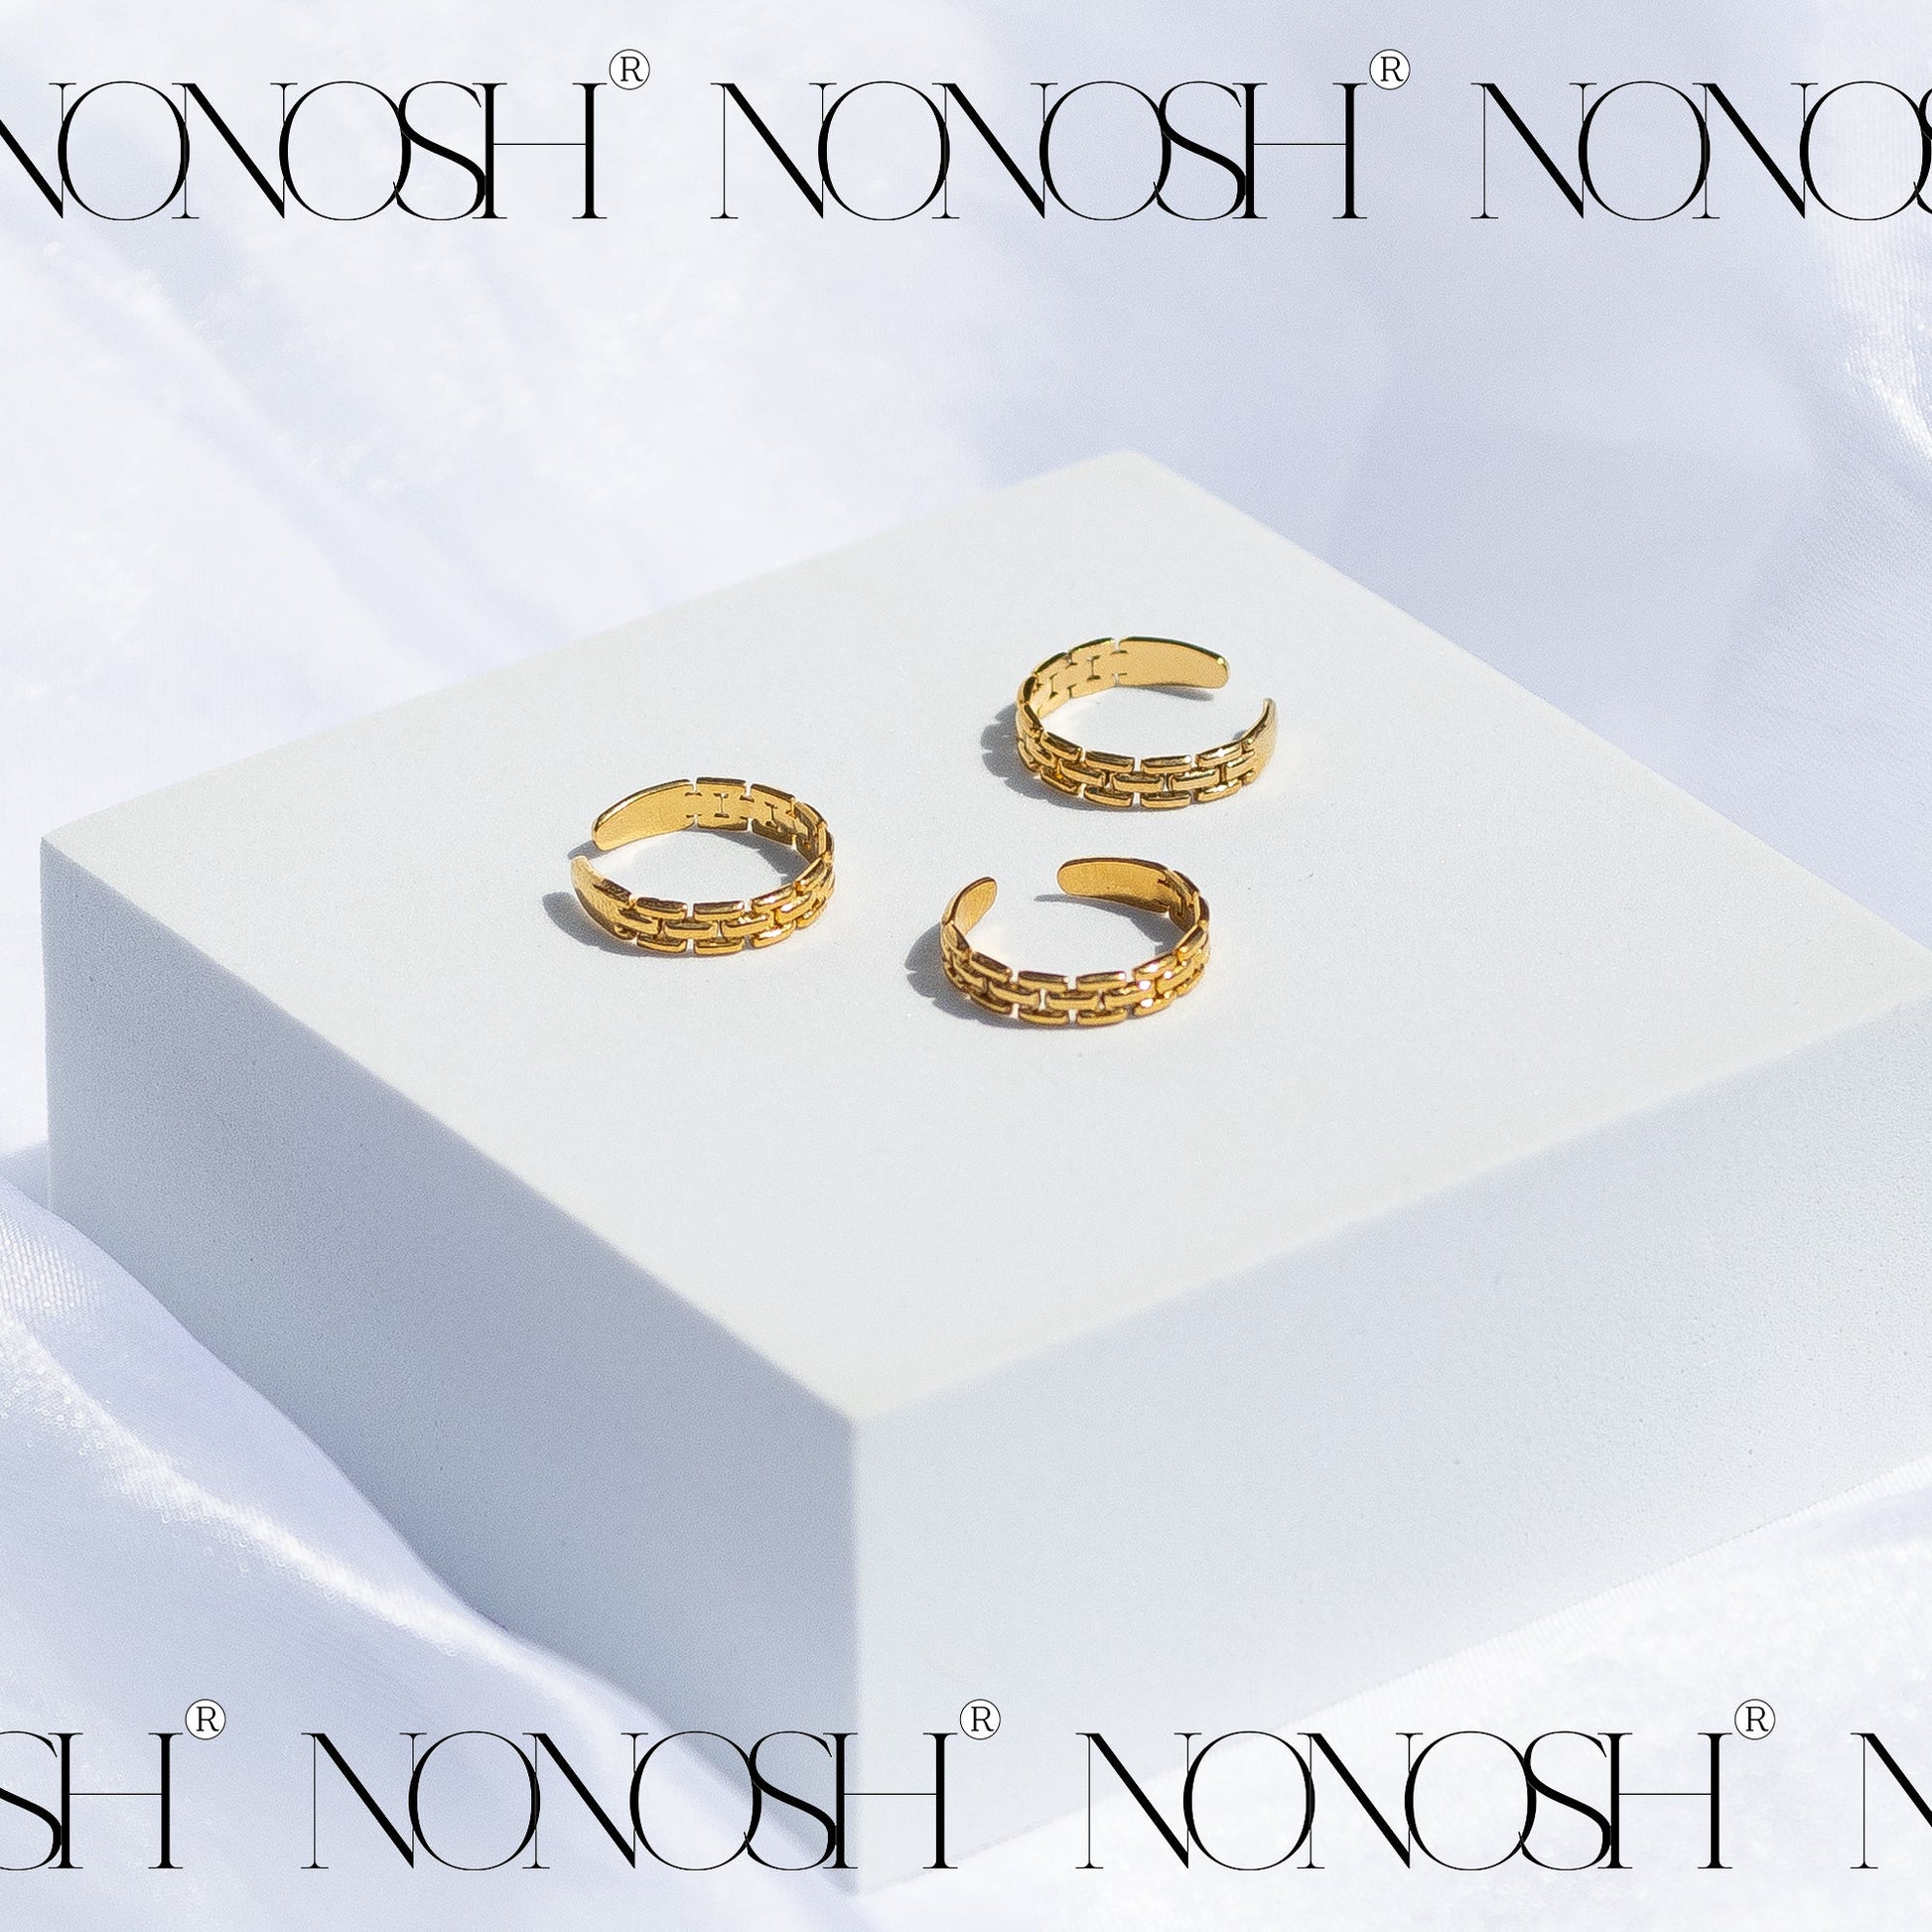 18k vergoldeter Ring Vintage Style Verstellbar - NONOSH